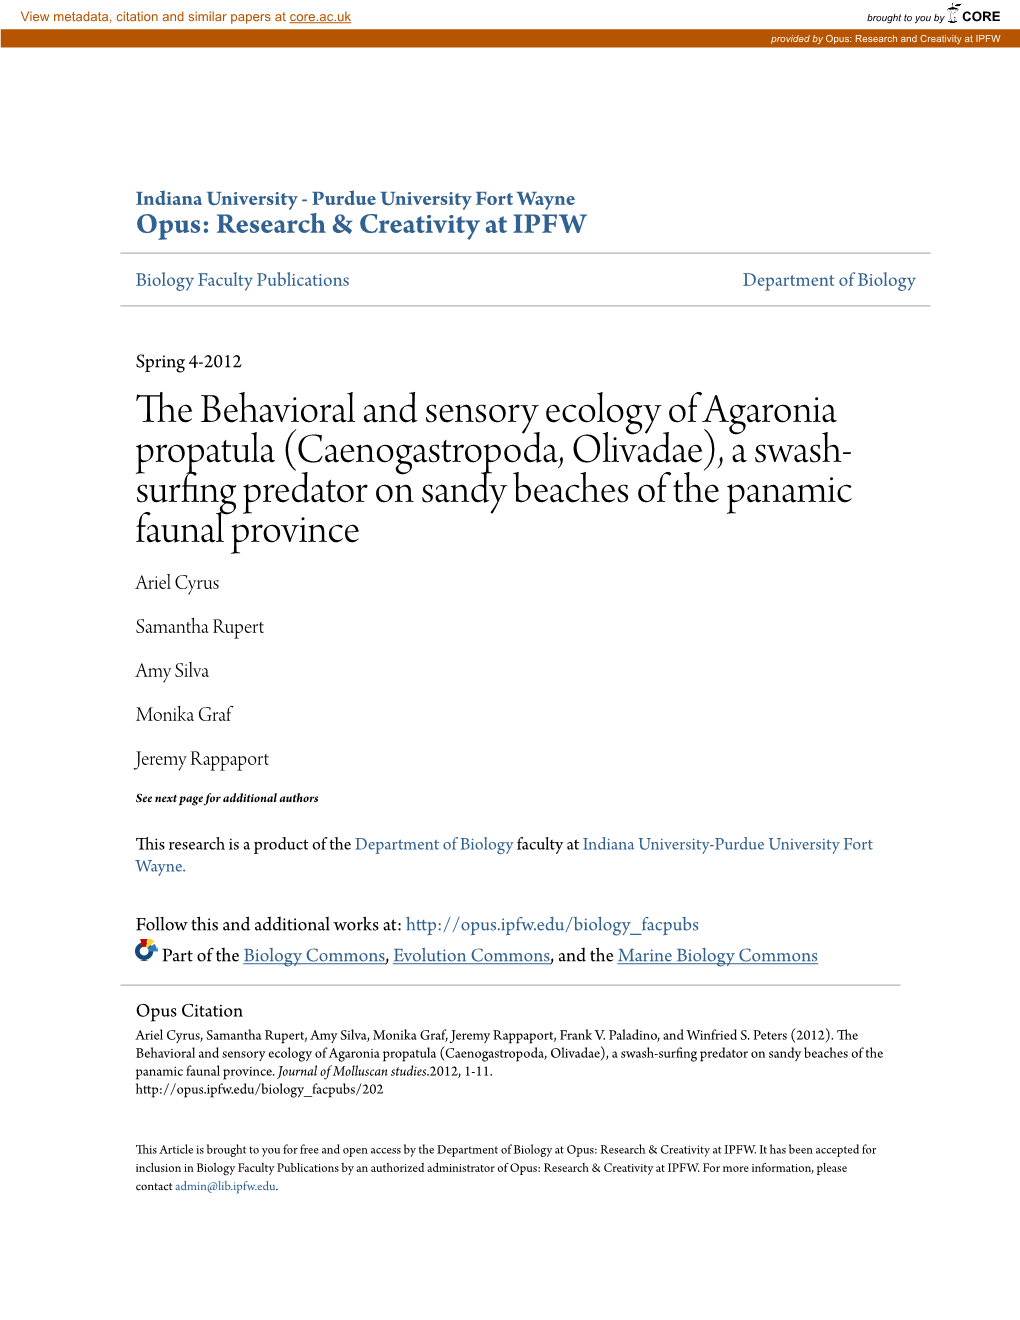 The Behavioral and Sensory Ecology of Agaronia Propatula